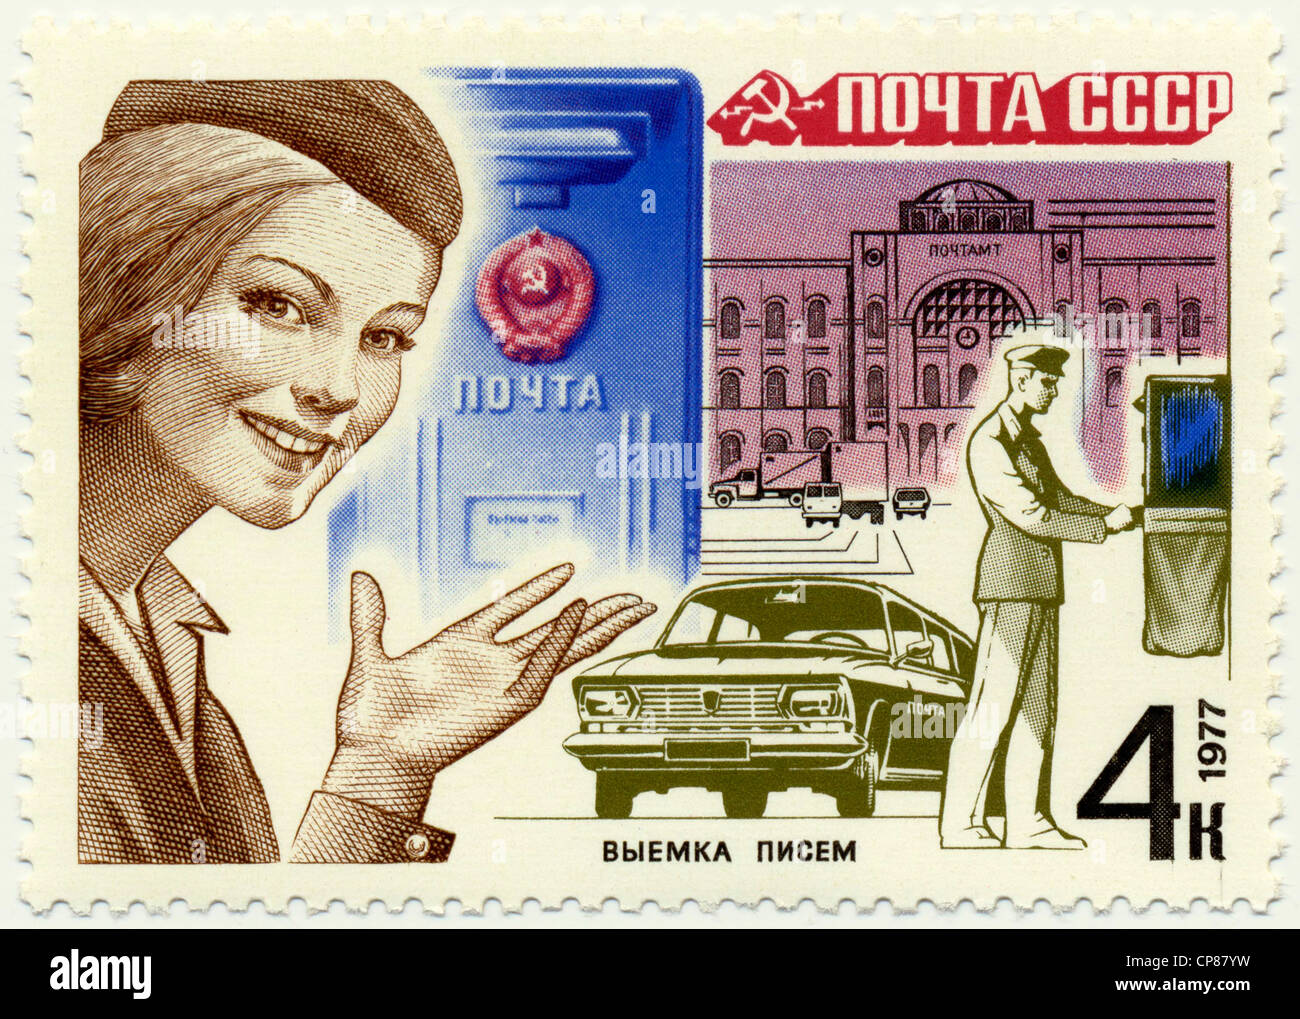 Historic postage stamps of the USSR, postal delivery, mailbox being emptied, Moskvitch 430, Historische Briefmarken, Thema Postz Stock Photo